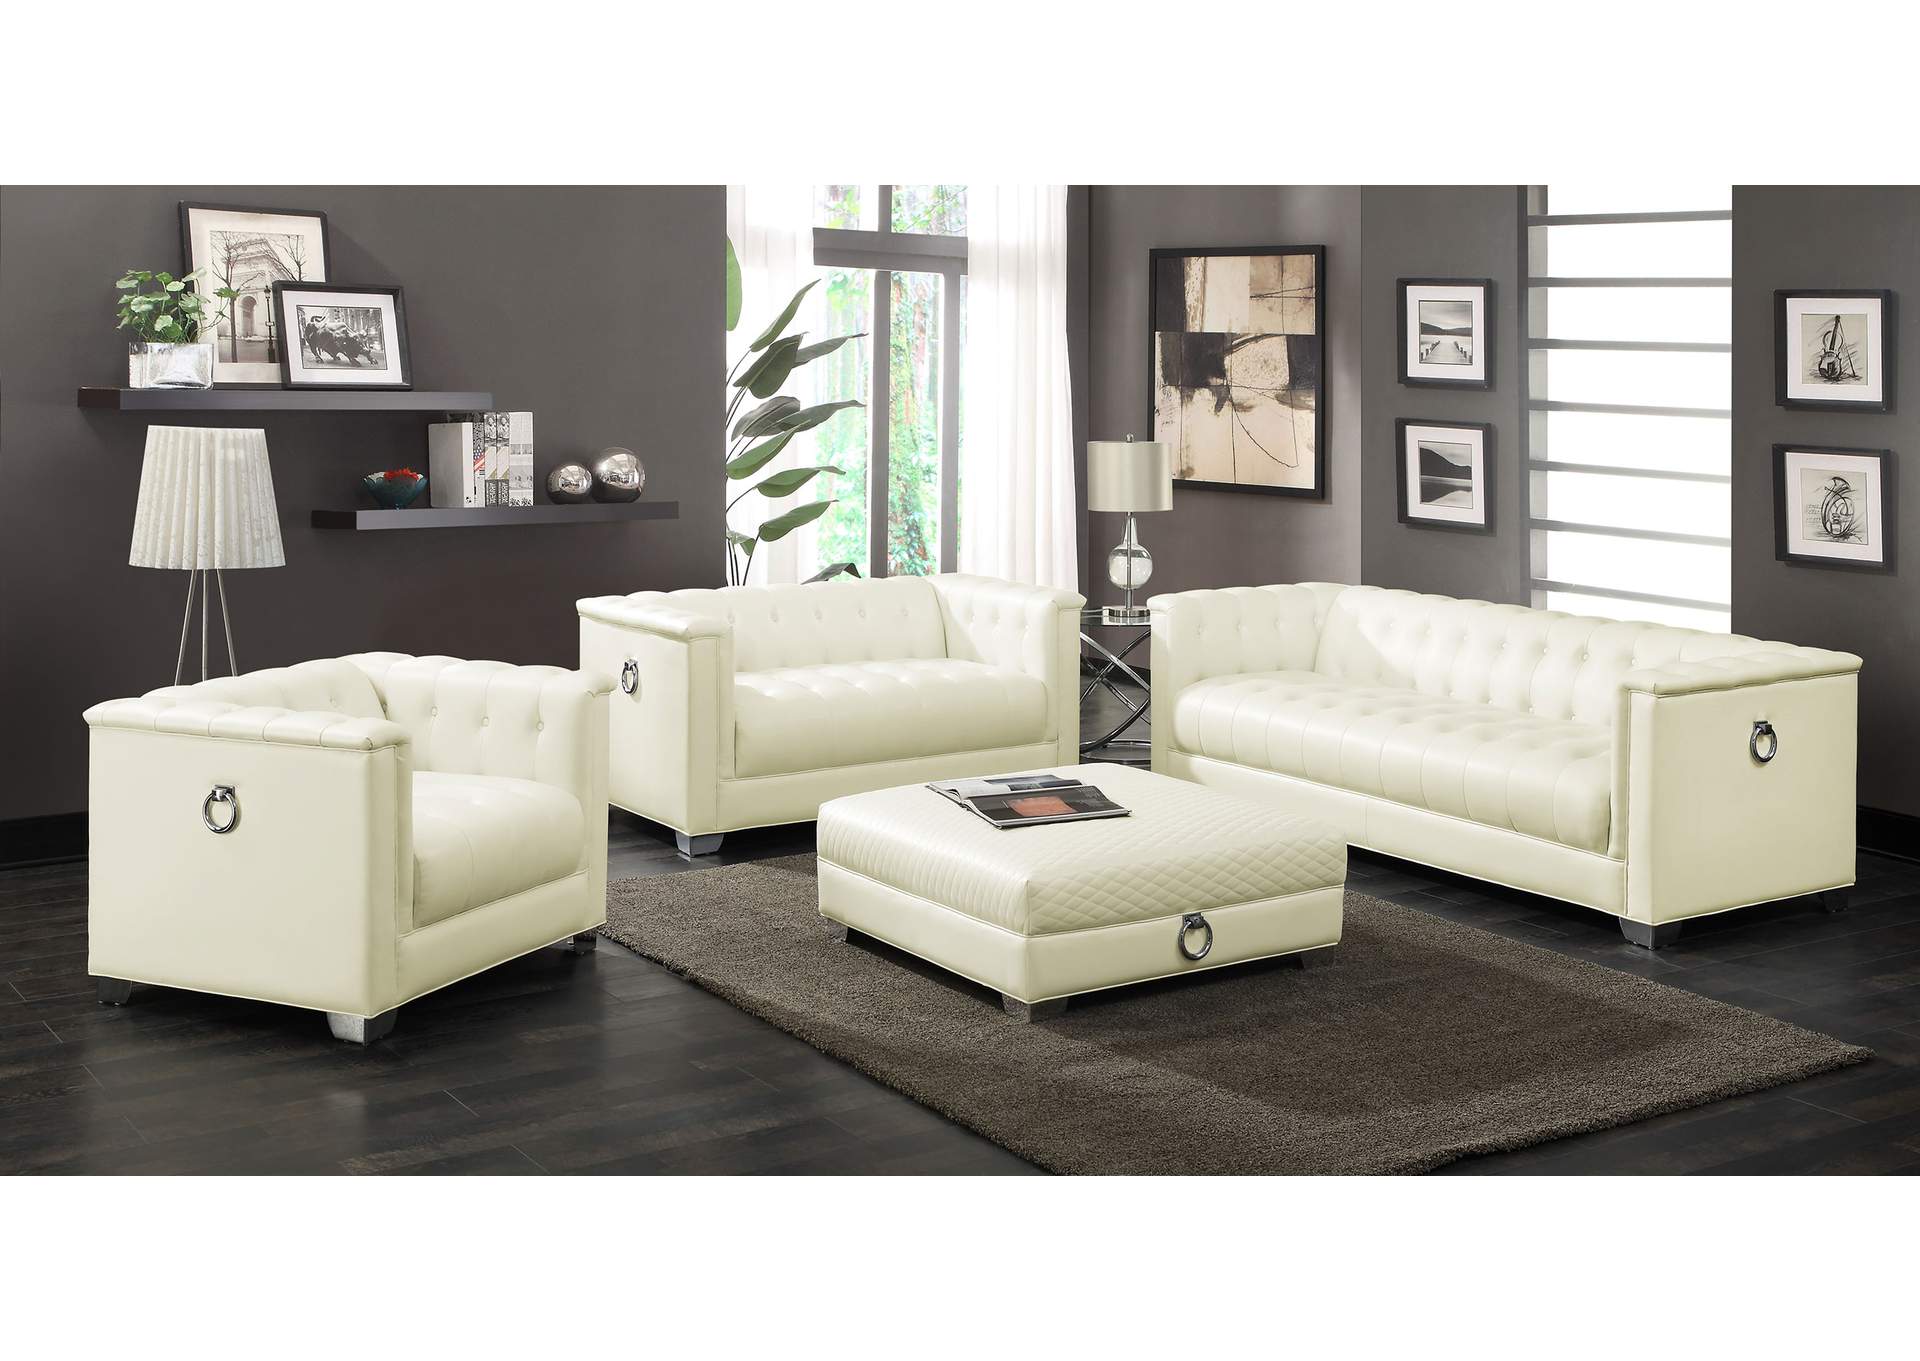 Chaviano Upholstered Ottoman Pearl White,Coaster Furniture